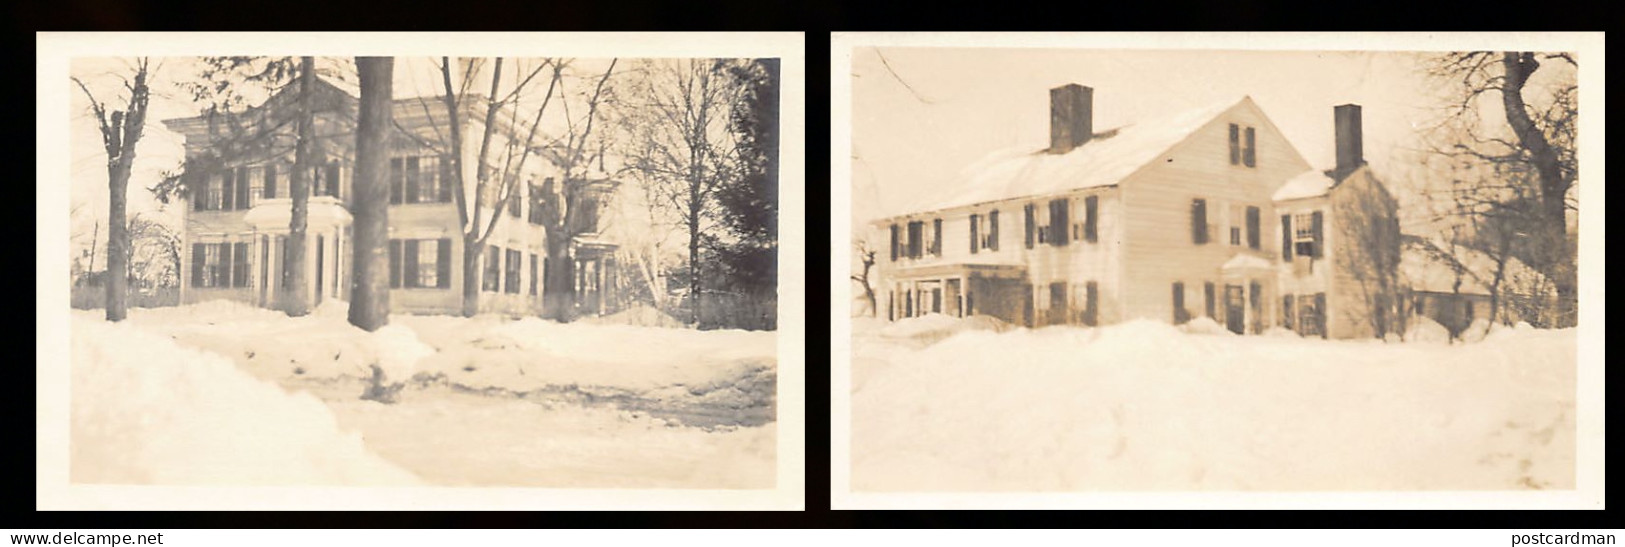 NORTHAMPTON (MA) The Oldest House In Northampton - Set Of 2 Real Photo Postcards - Year 1920 - Northampton